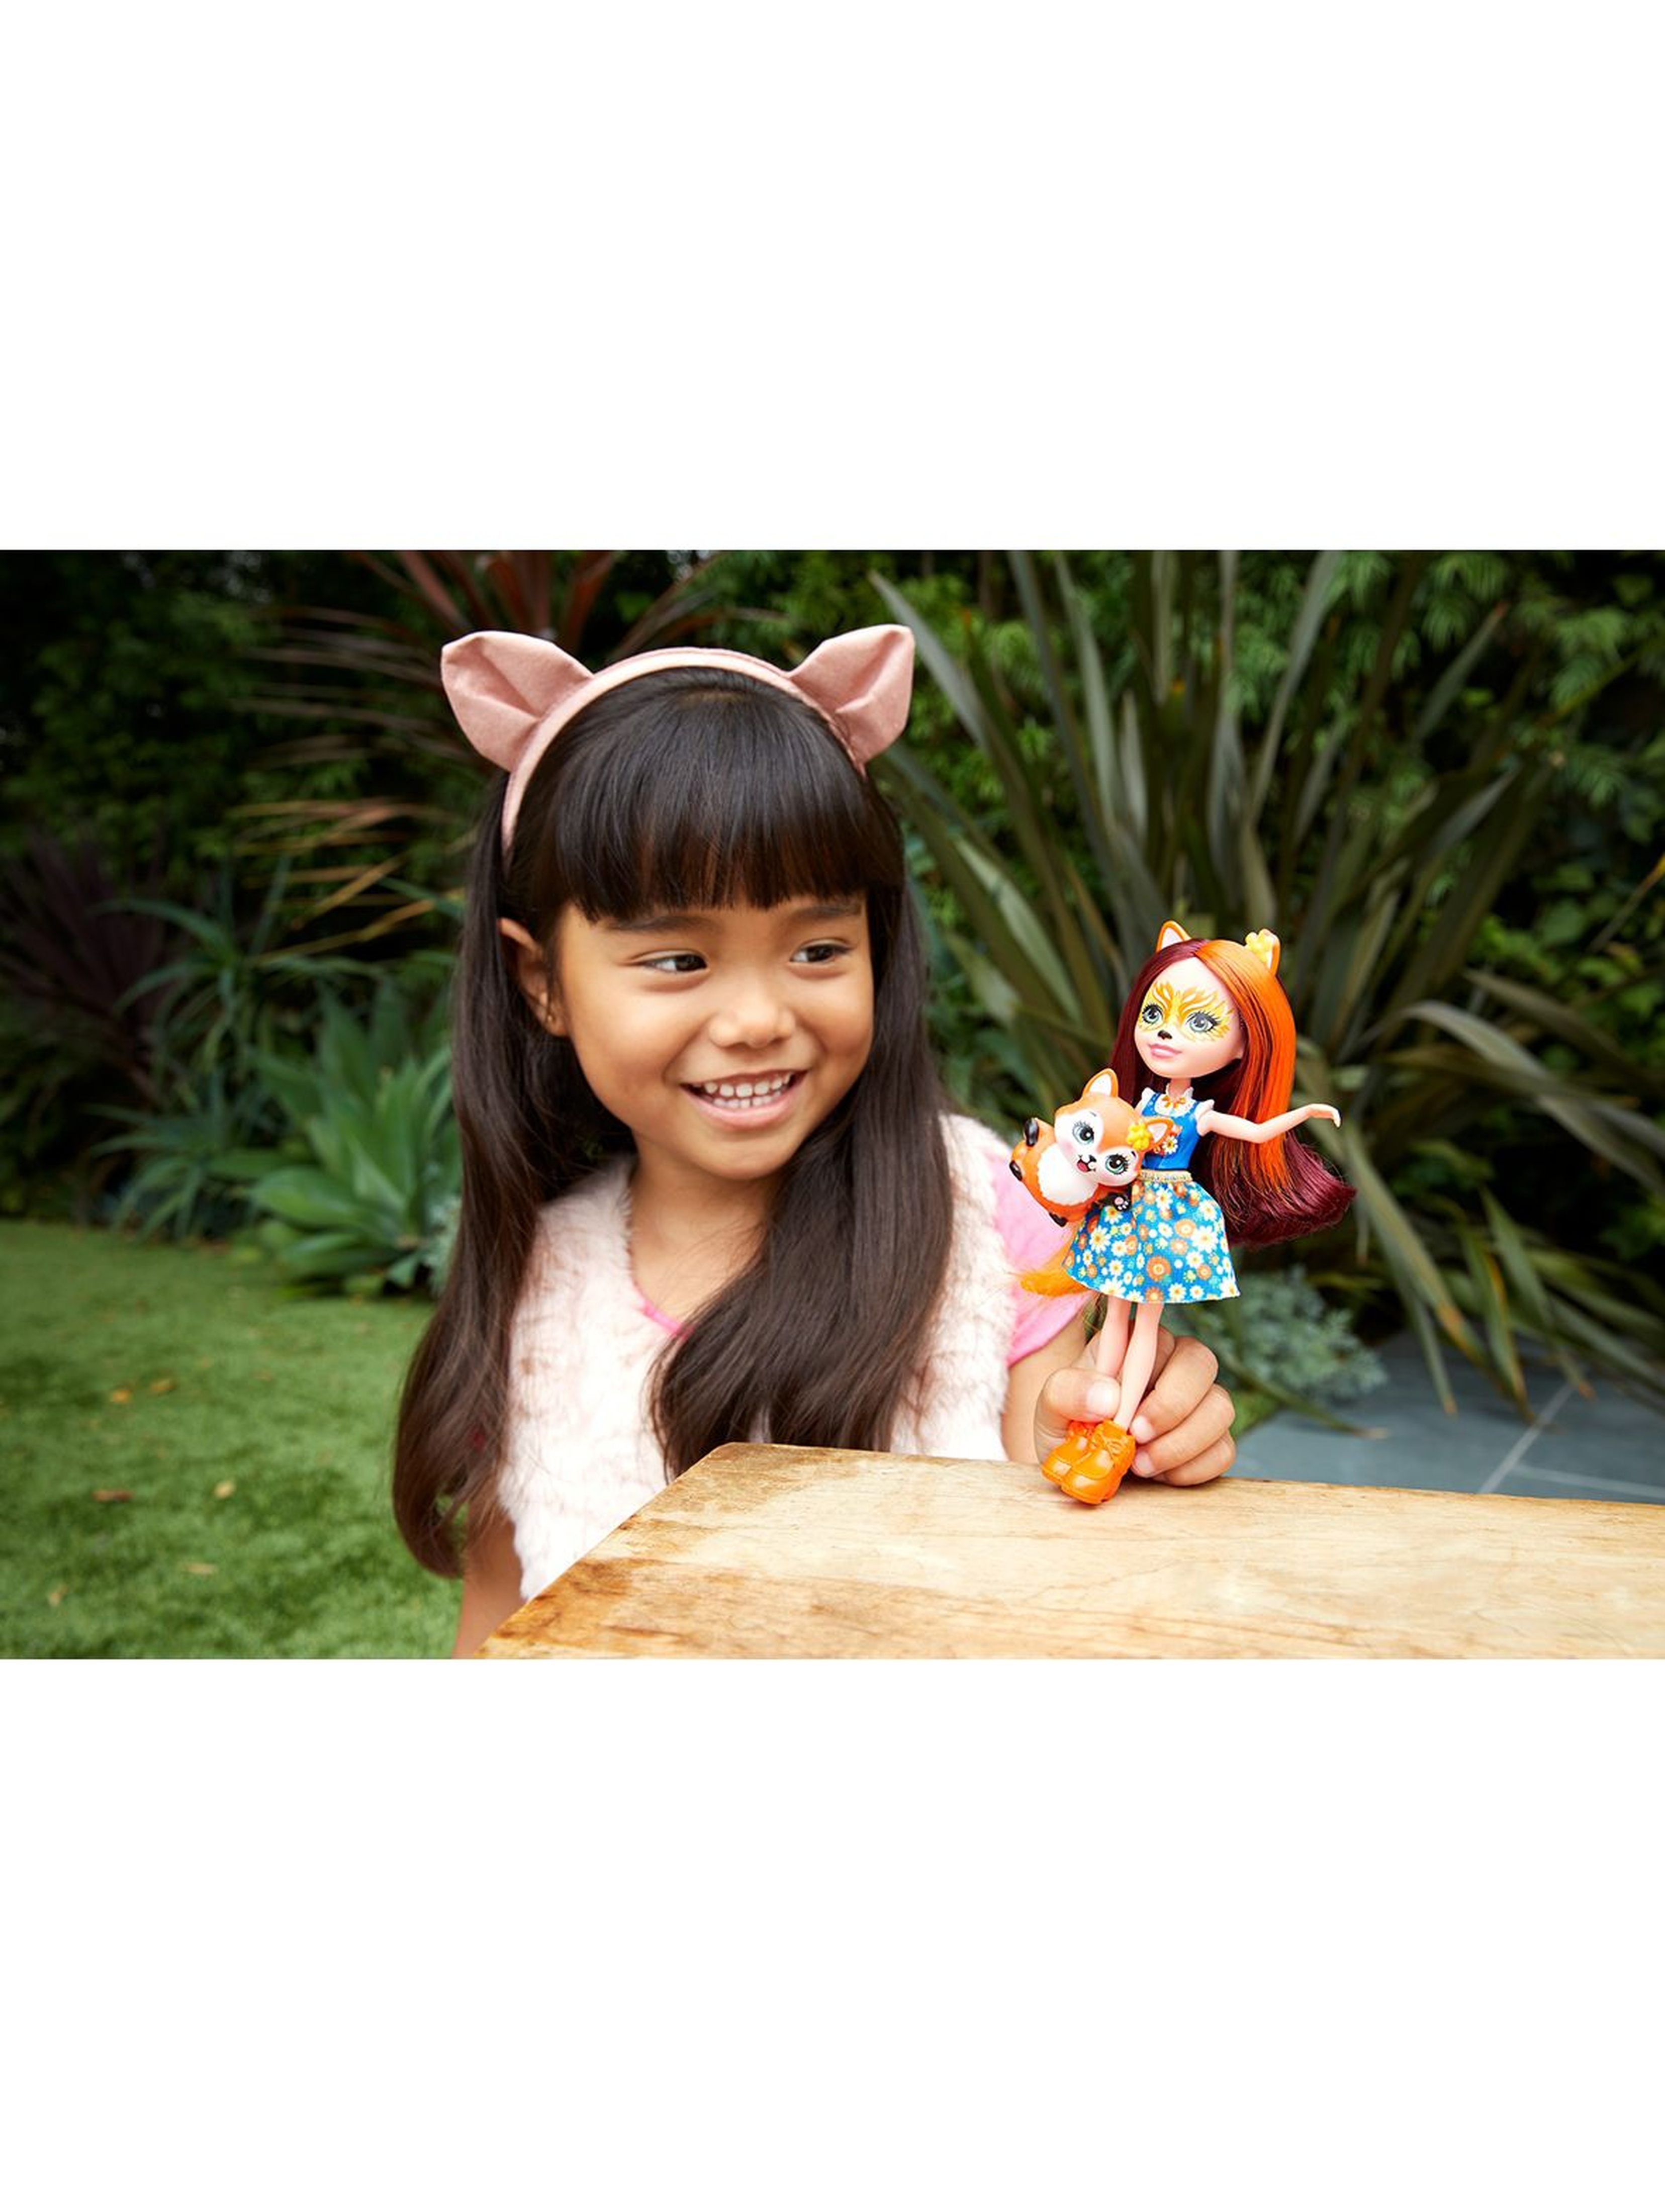 Enchantimals Lalka Felicity Fox + lisek Flick figurka wiek 4+